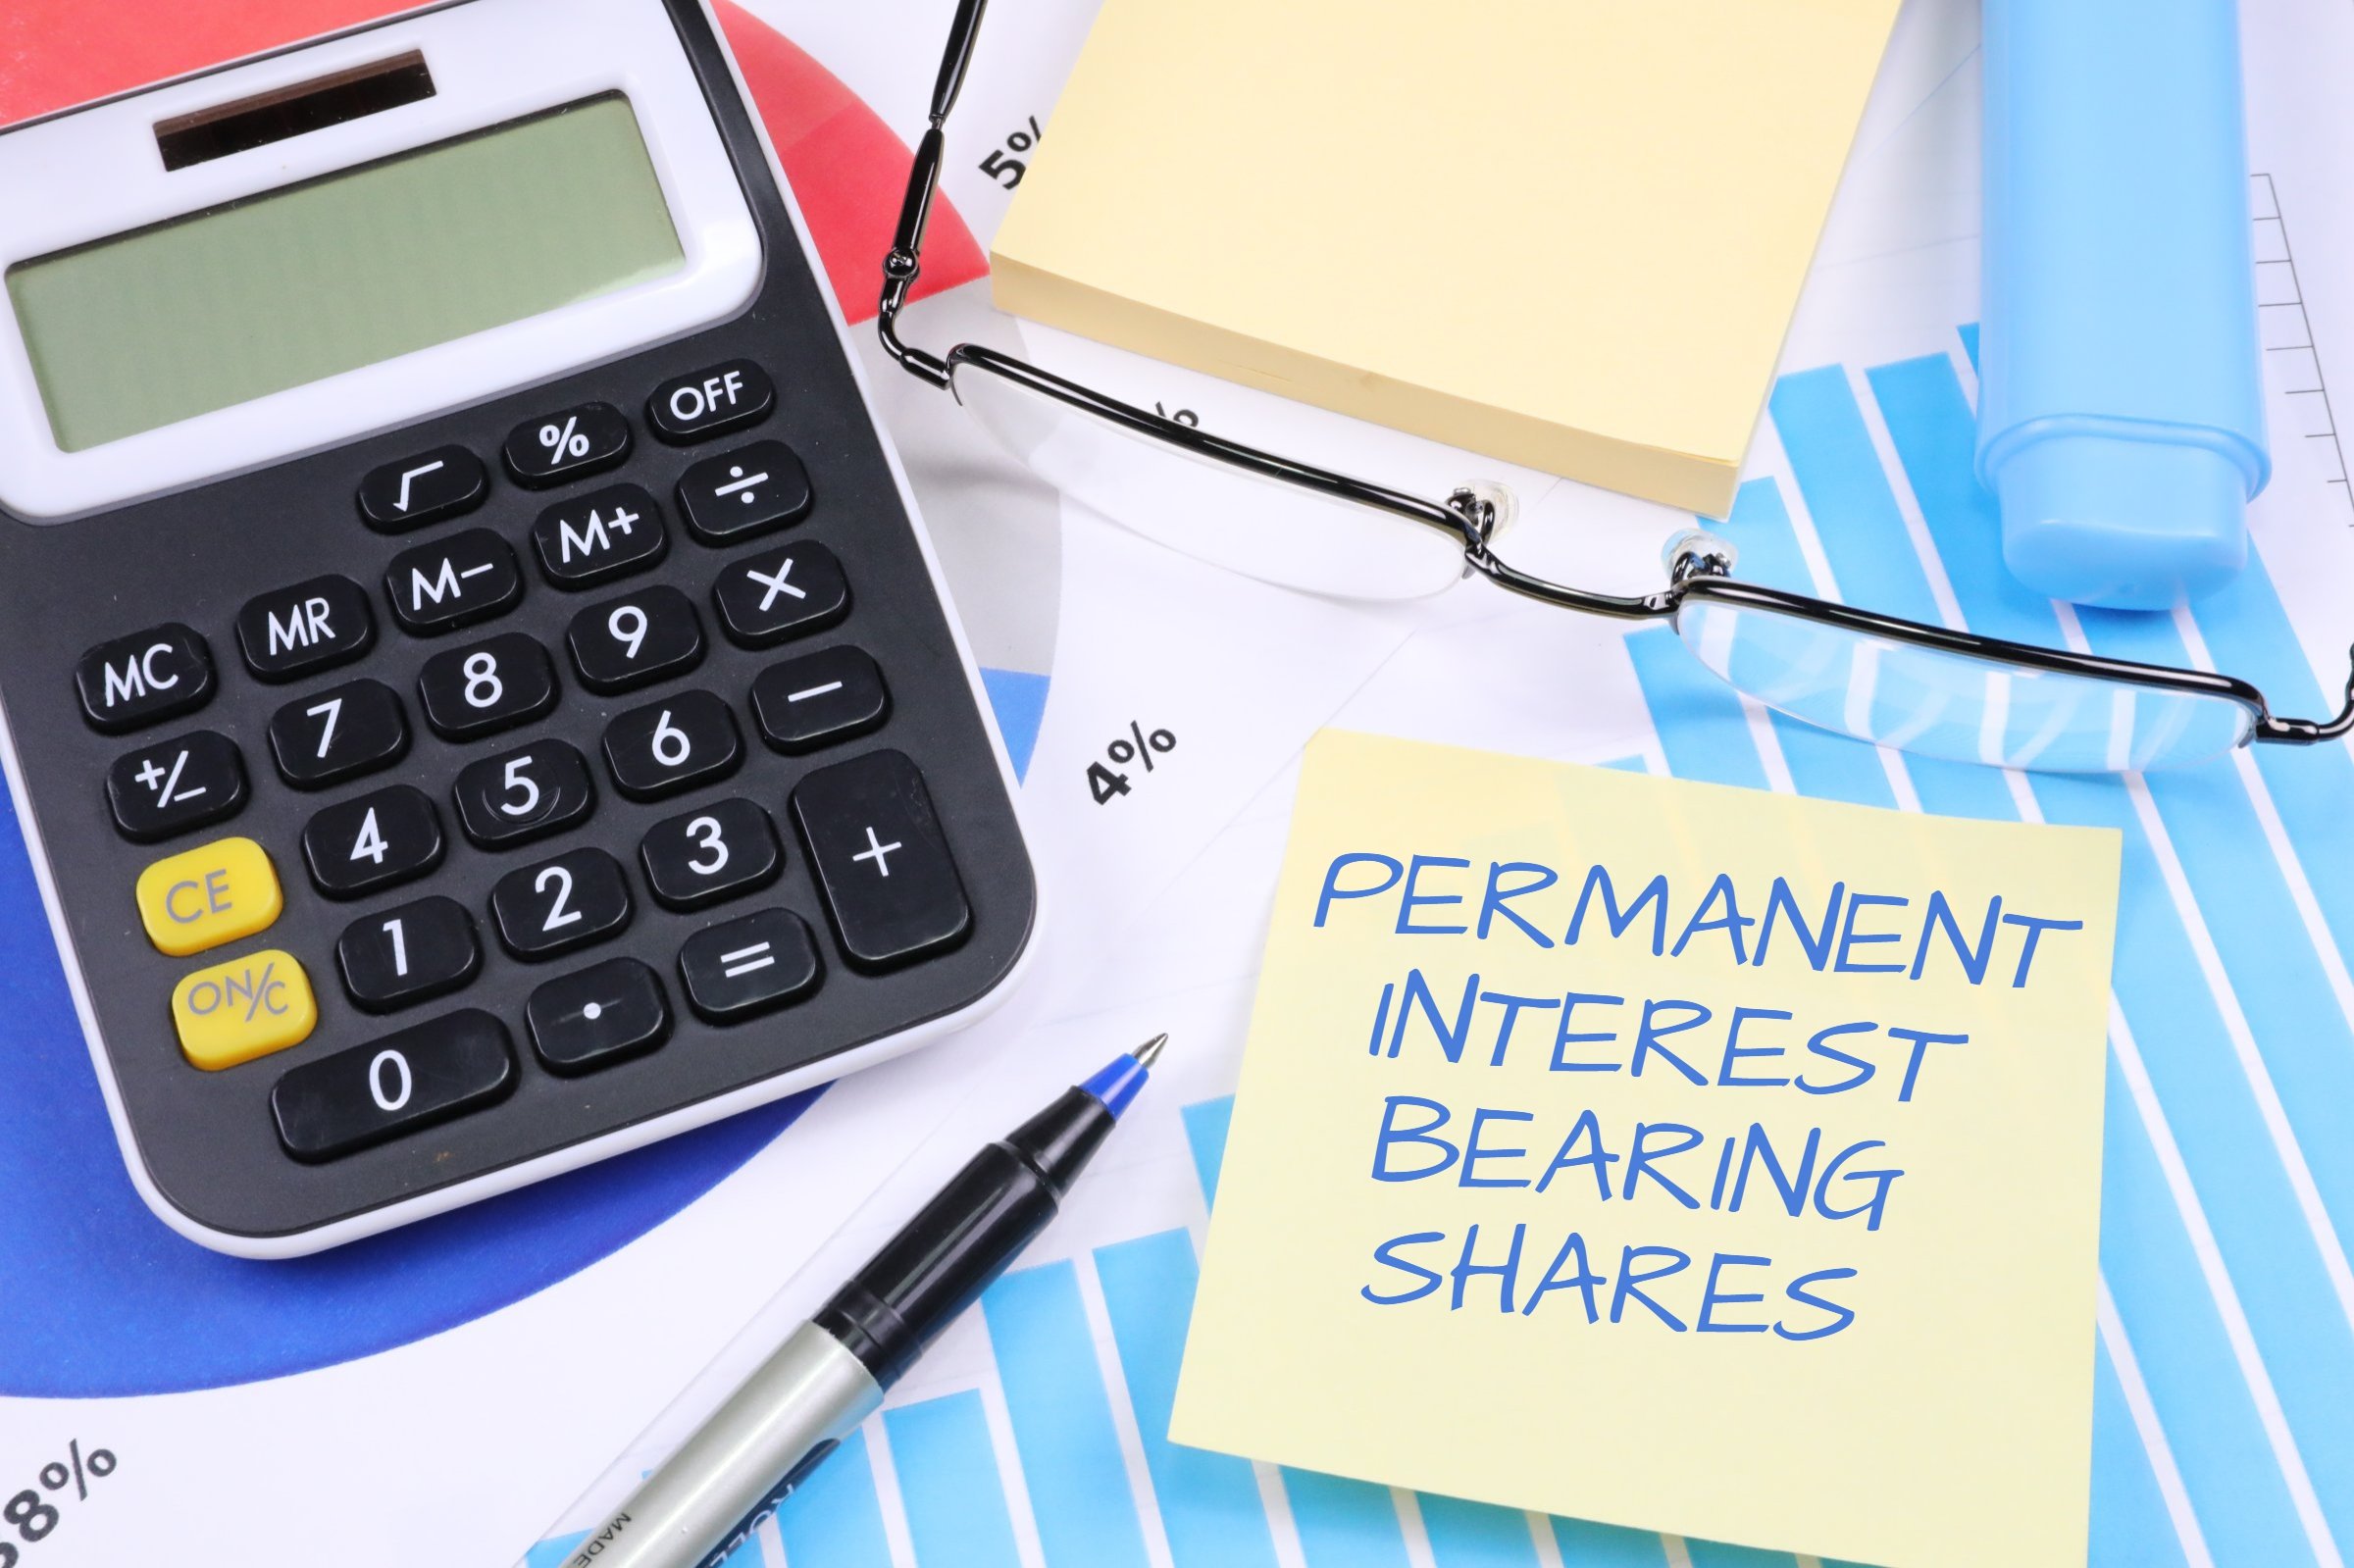 Permanent Interest Bearing Shares